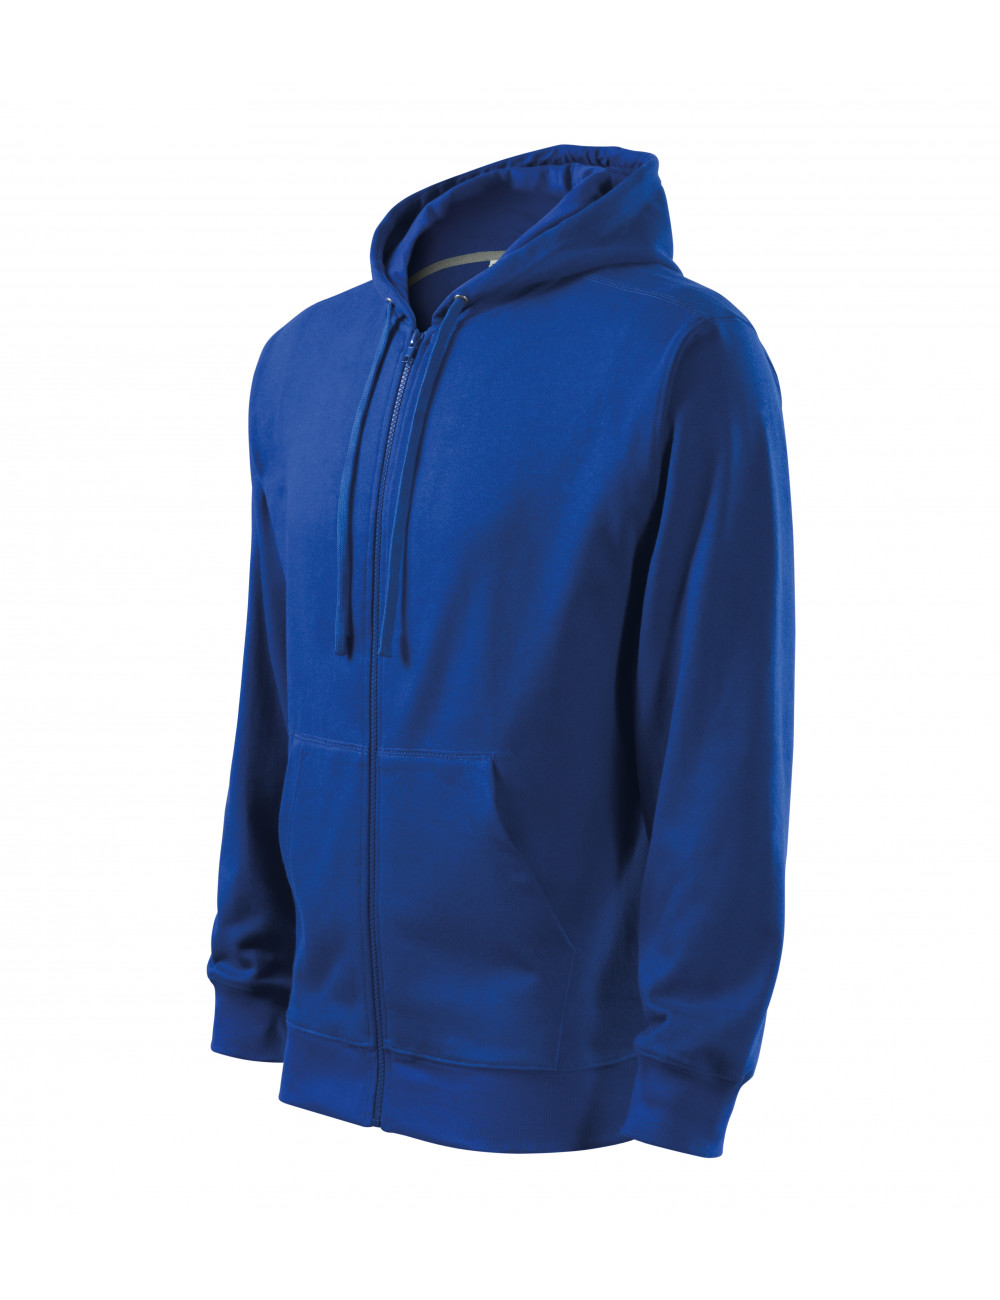 Trendiges Herren-Sweatshirt mit Reißverschluss 410 kornblumenblau Adler Malfini